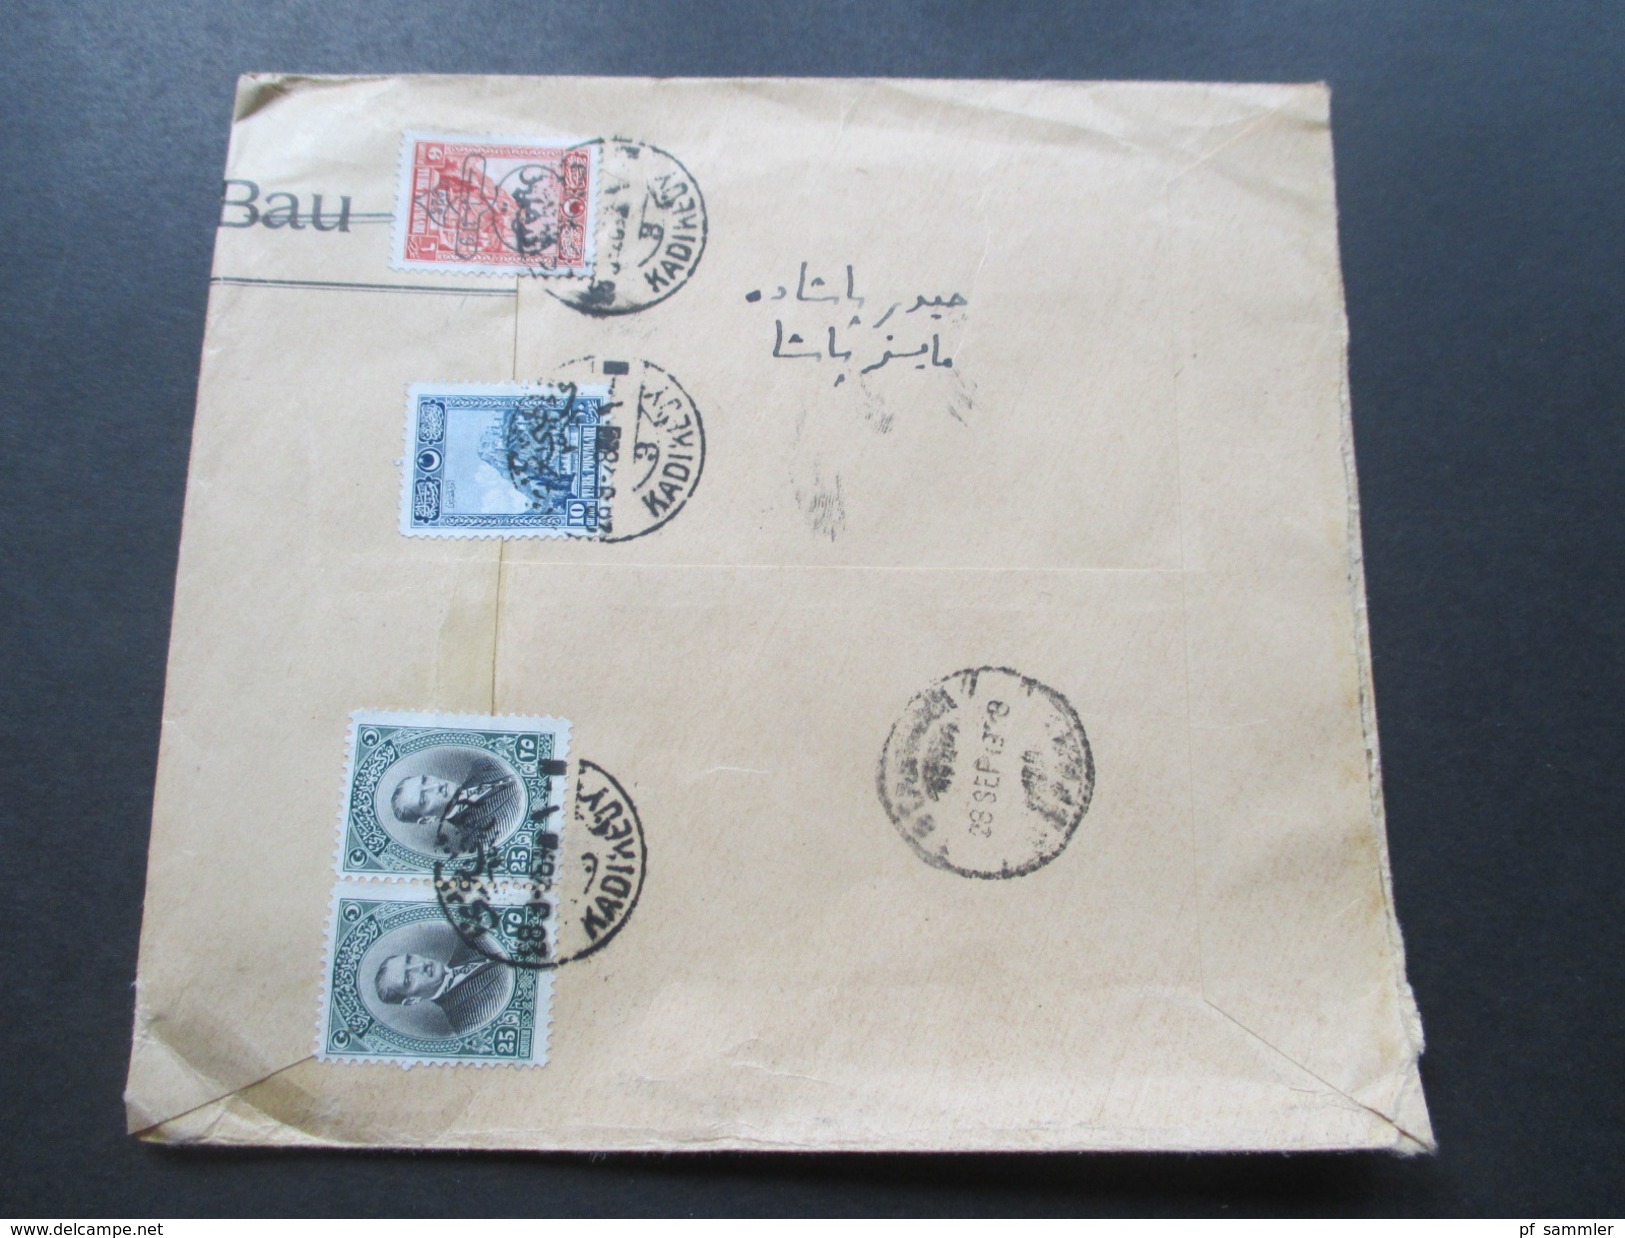 Türkei 1928 R-Brief R-Zettel St. Kadikeuy 515 / Kadikoy! Nr. 875 Smyrna Aufdruck MiF. RRR?!? Nach Wien! - Covers & Documents